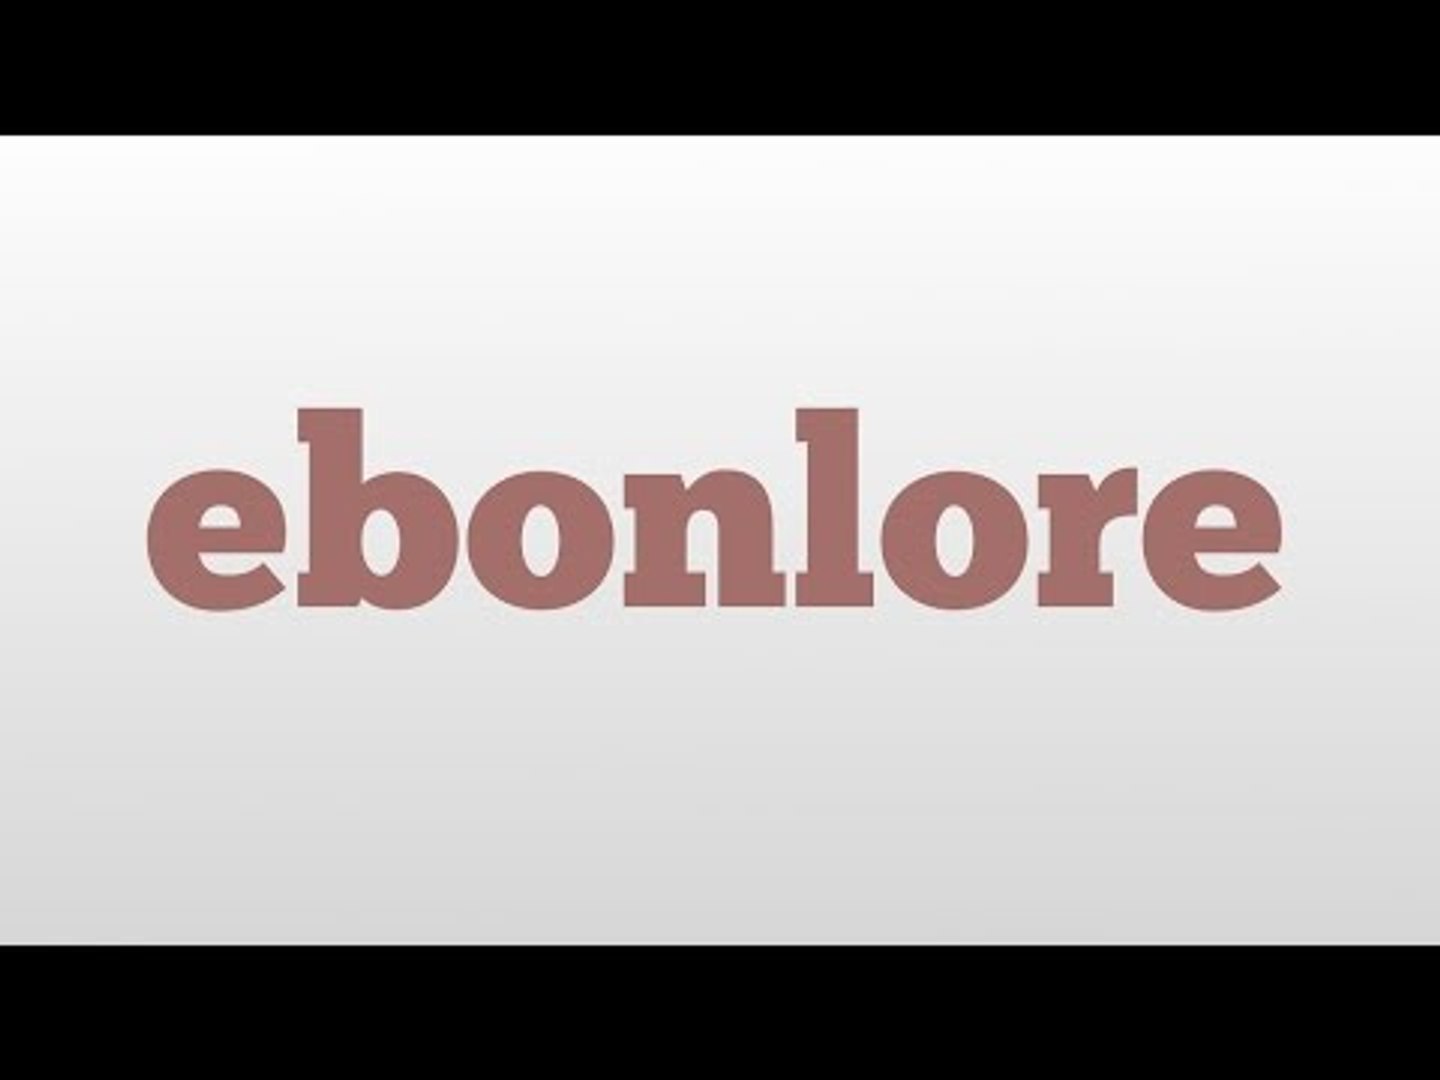 ⁣ebonlore meaning and pronunciation